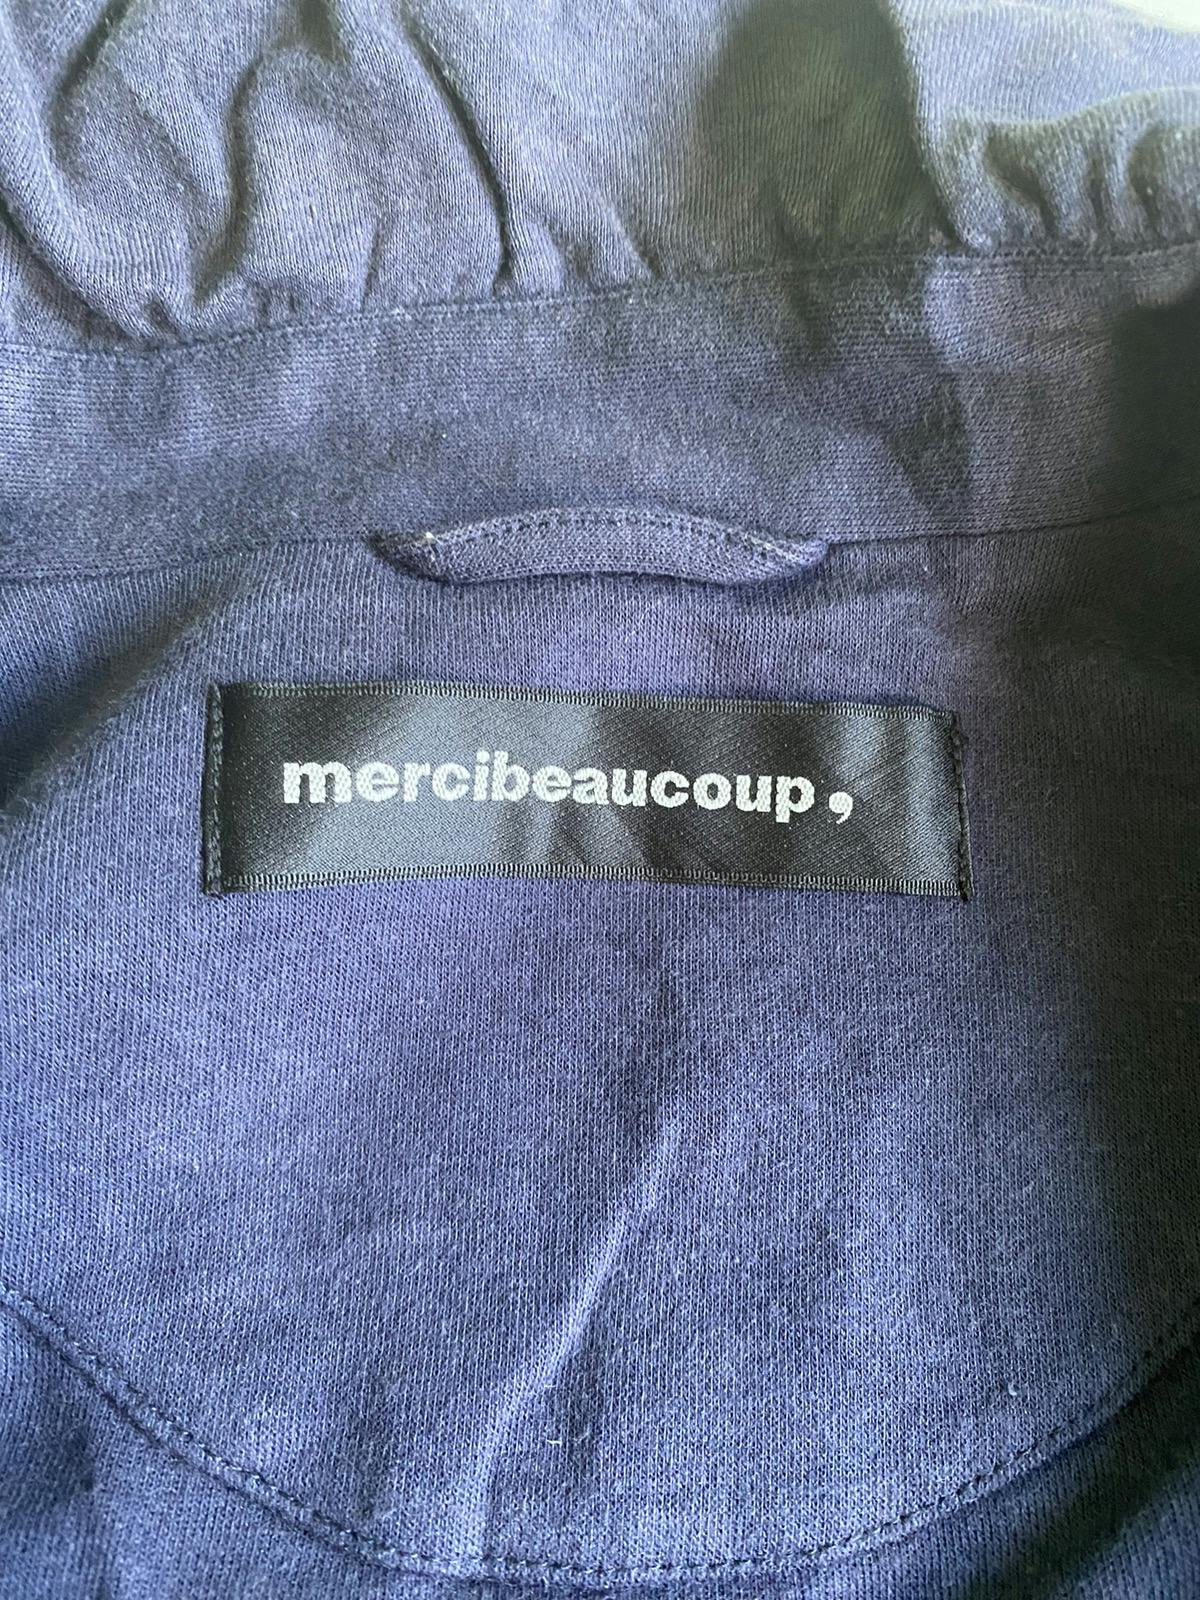 Vintage Mercibeaucoup ladies Faded Coats - 6